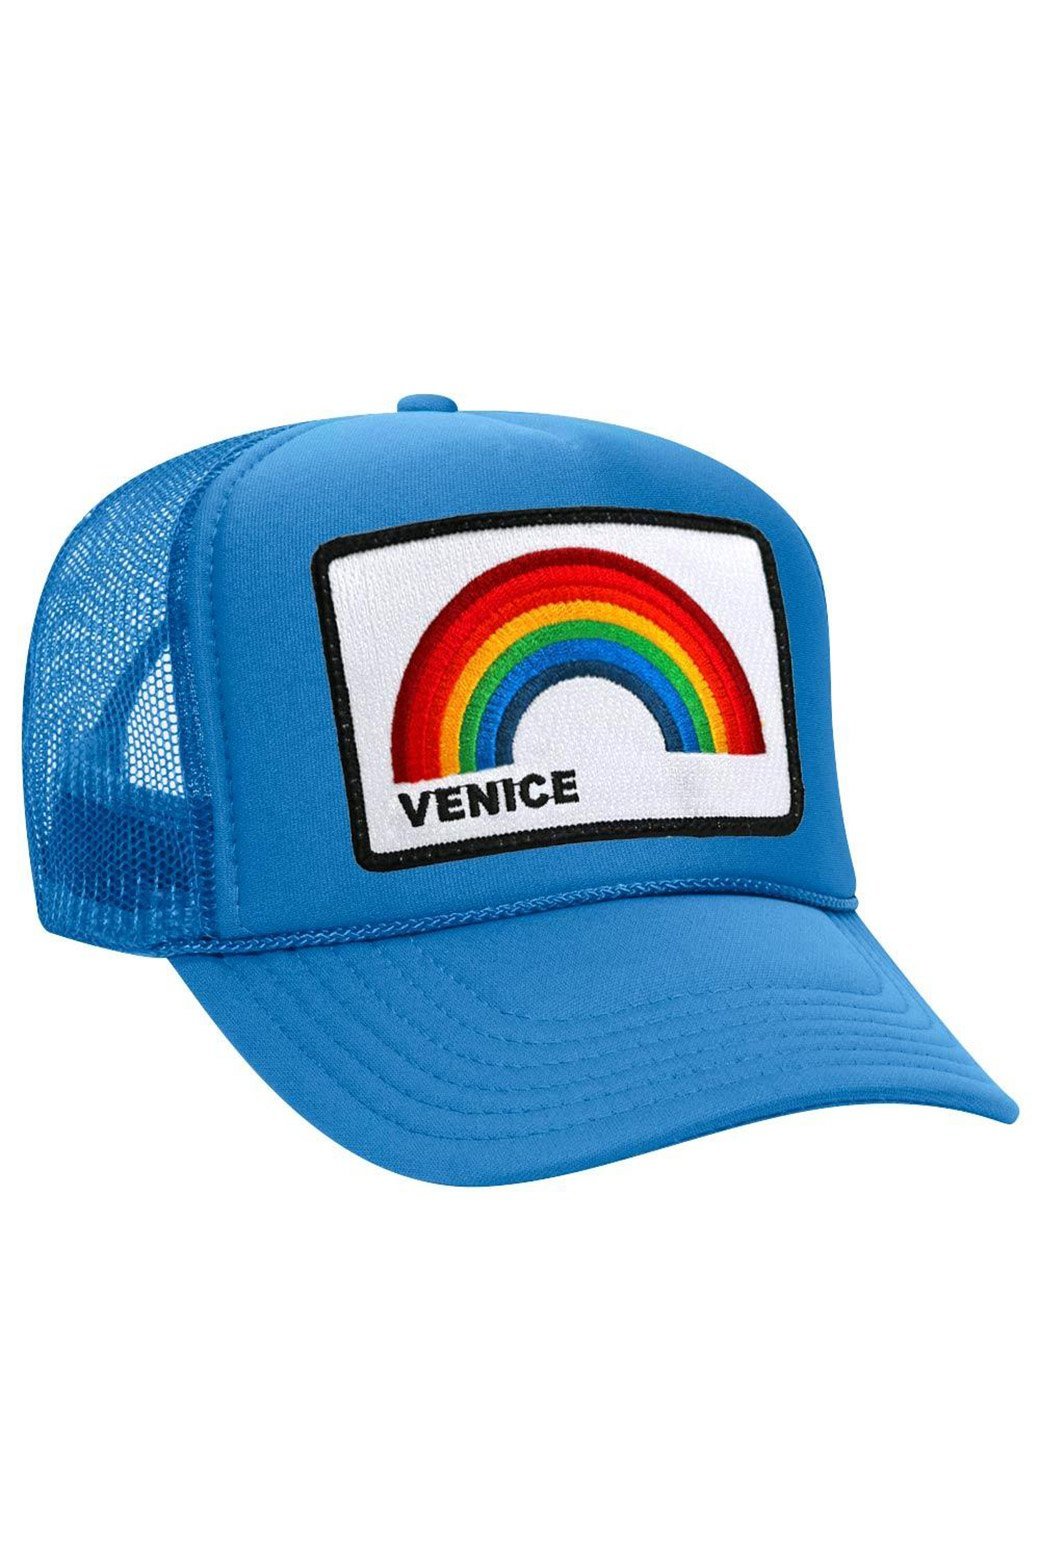 VENICE RAINBOW TRUCKER HAT HATS Aviator Nation OS LIGHT BLUE 